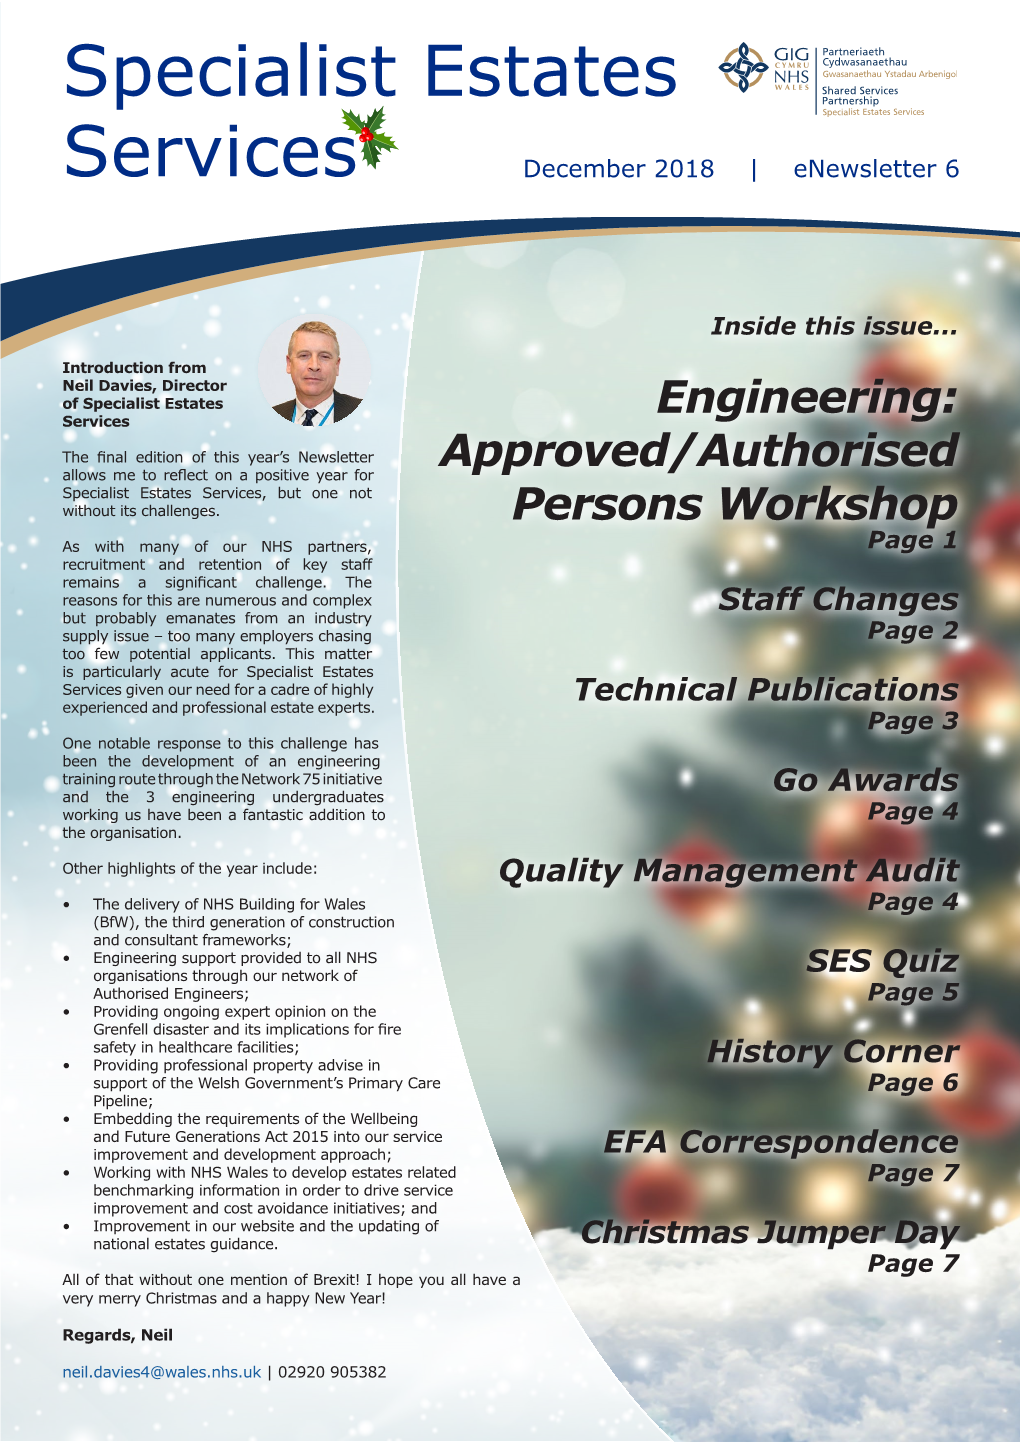 Specialist Estates Services Engineering